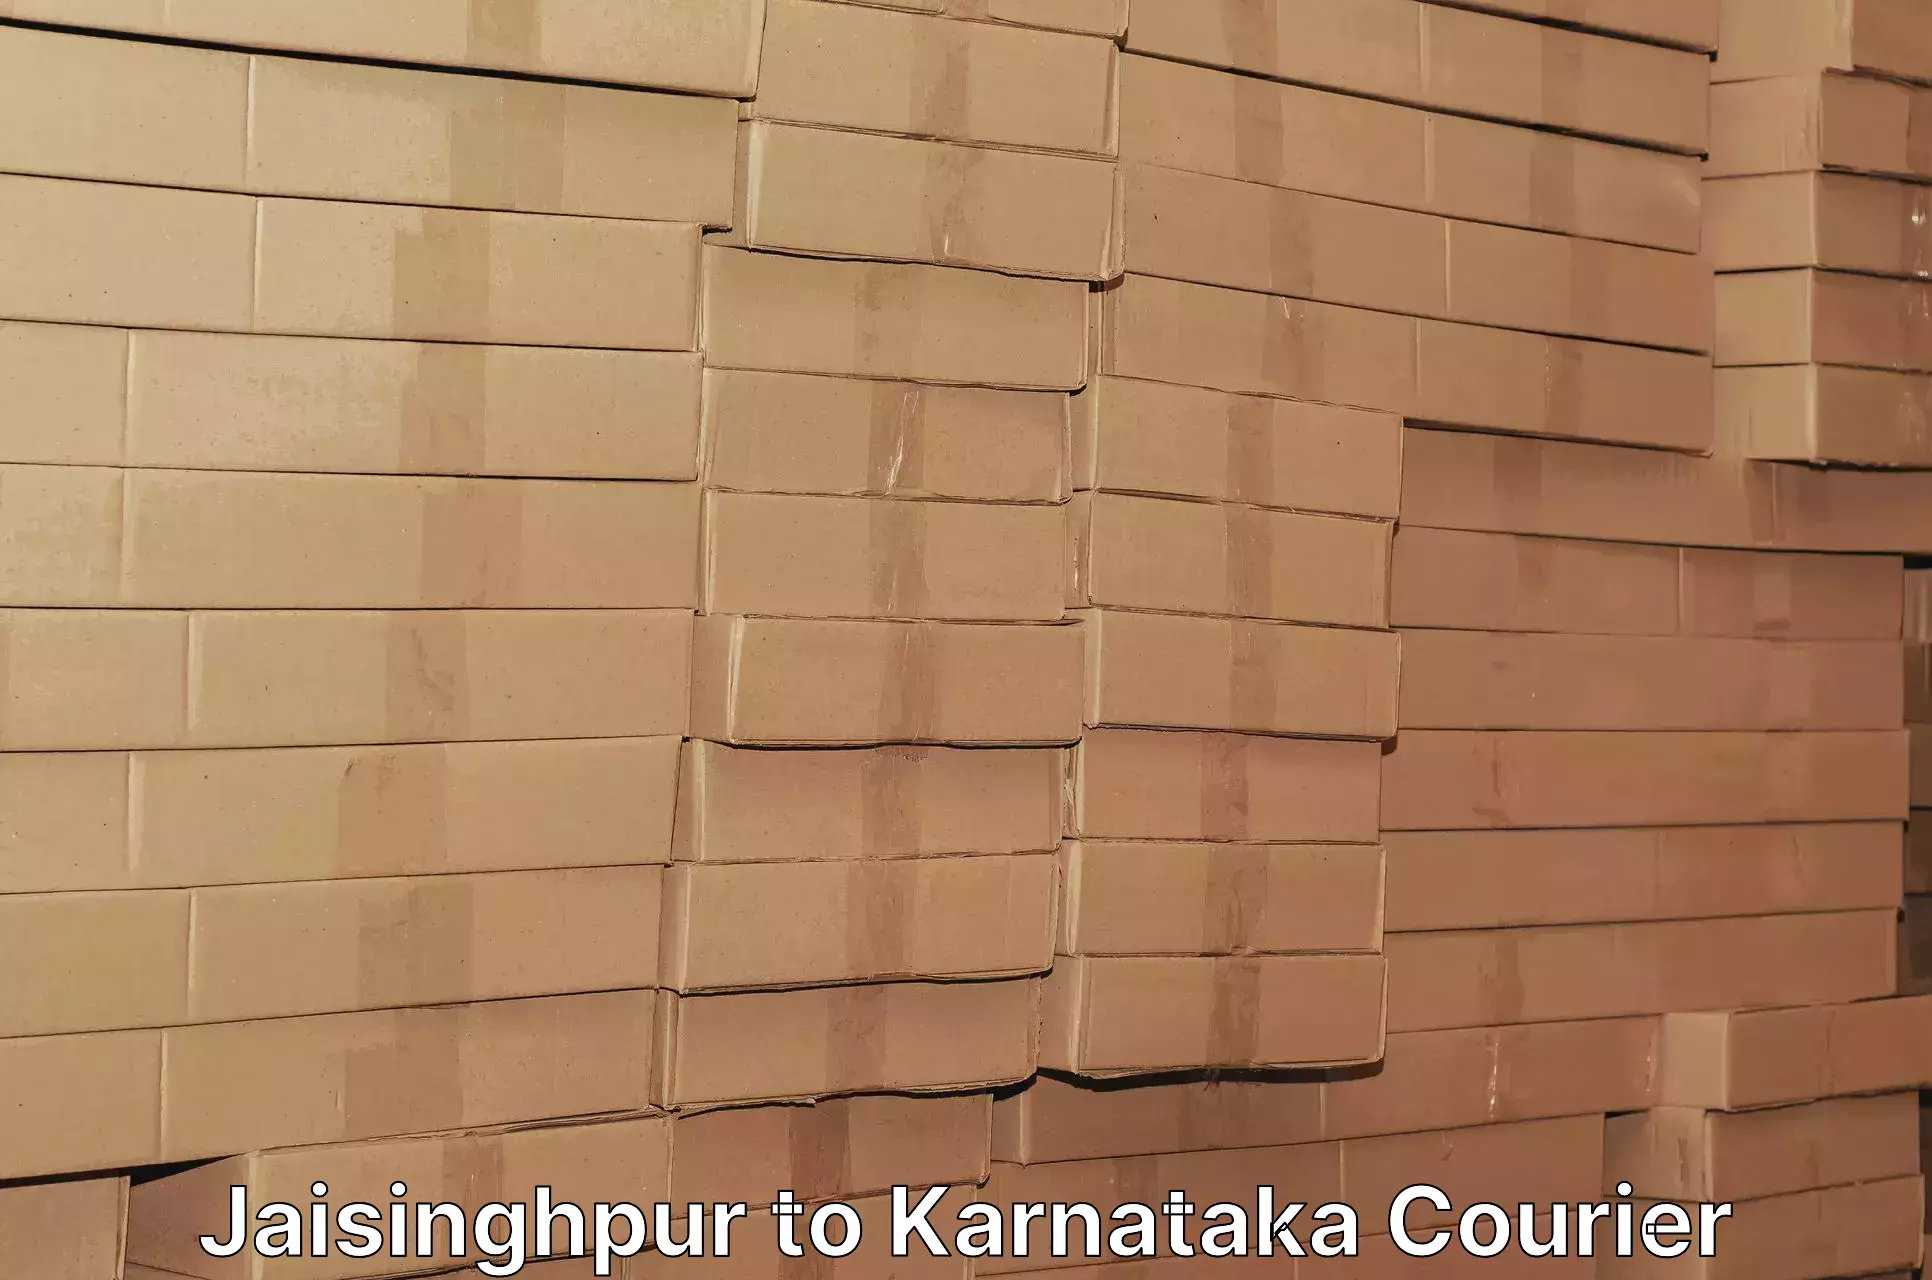 International courier networks Jaisinghpur to Karnataka